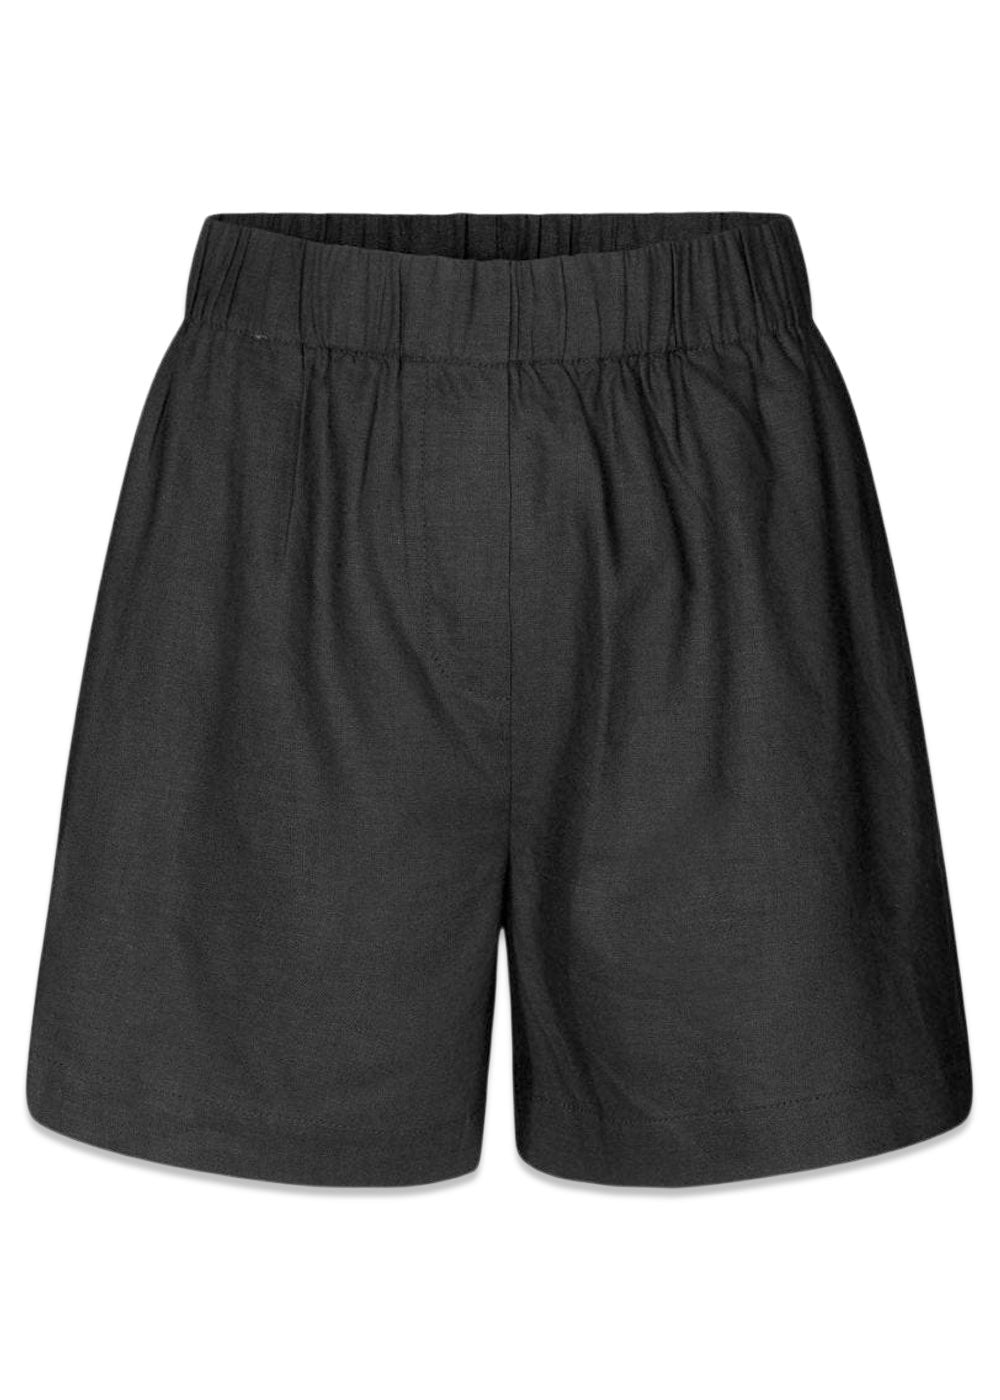 DarrelMD shorts - Black